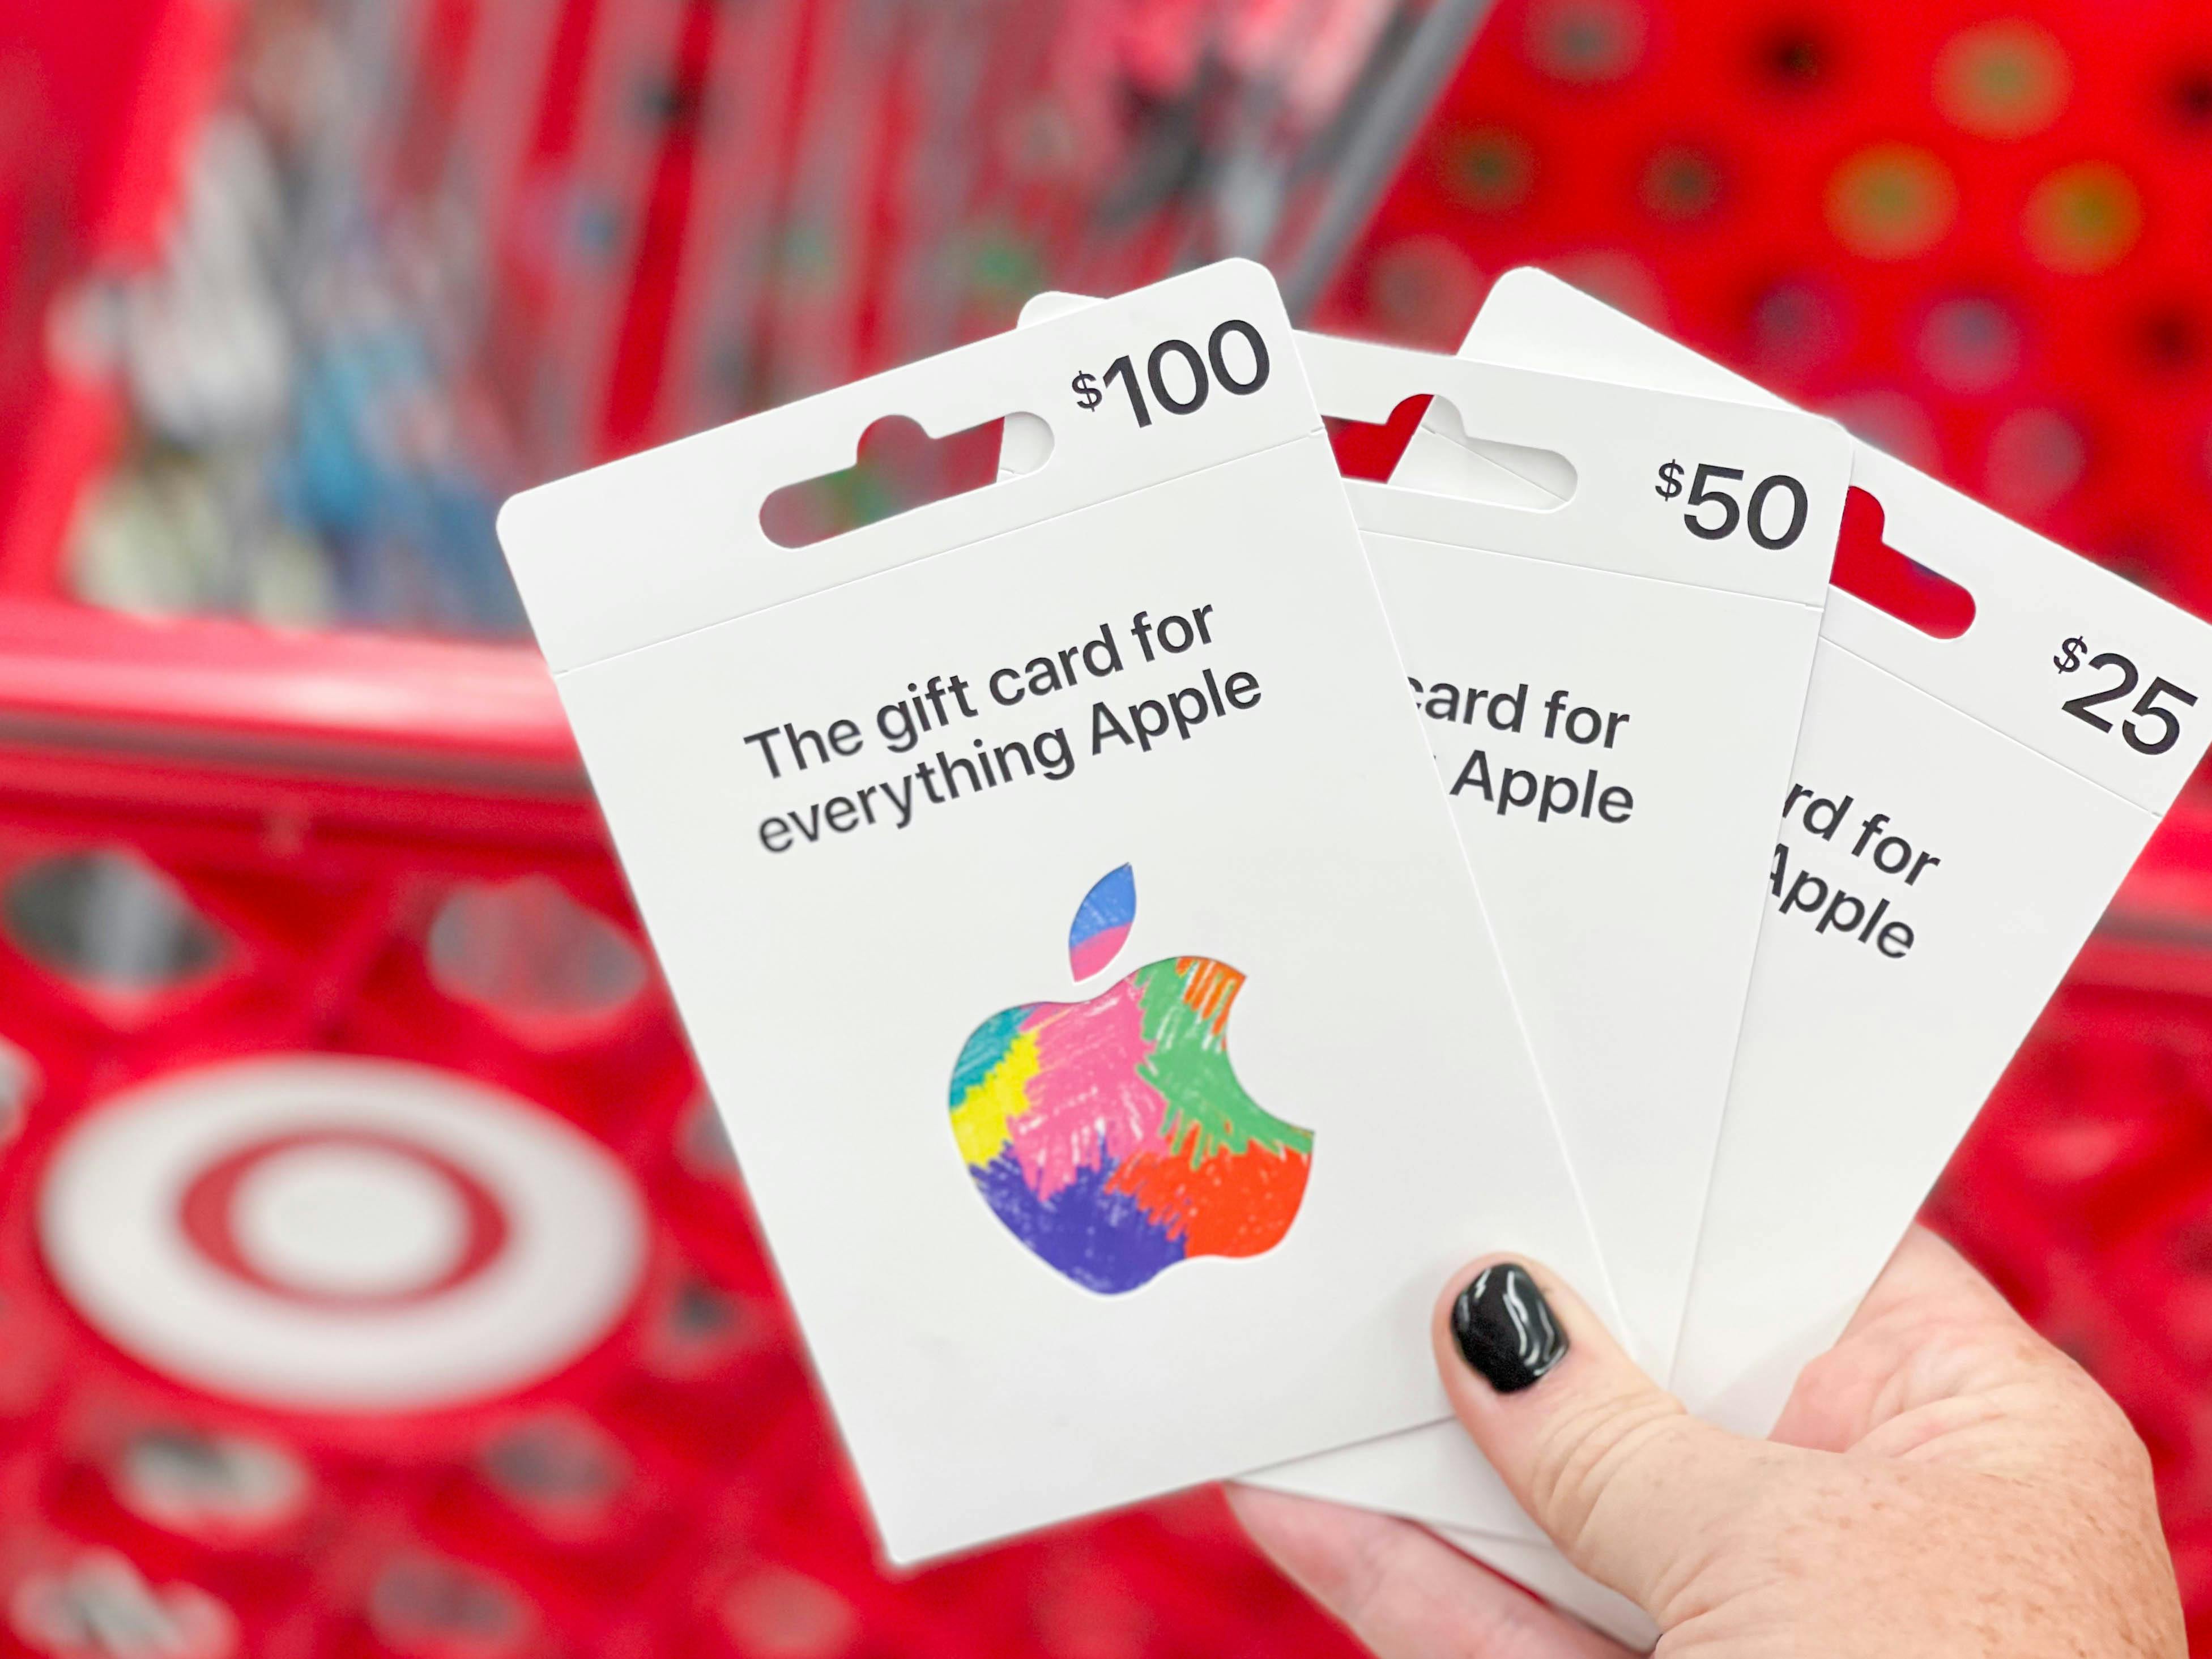 Where Can I Buy Target Gift Cards Besides Target? (Full List...)